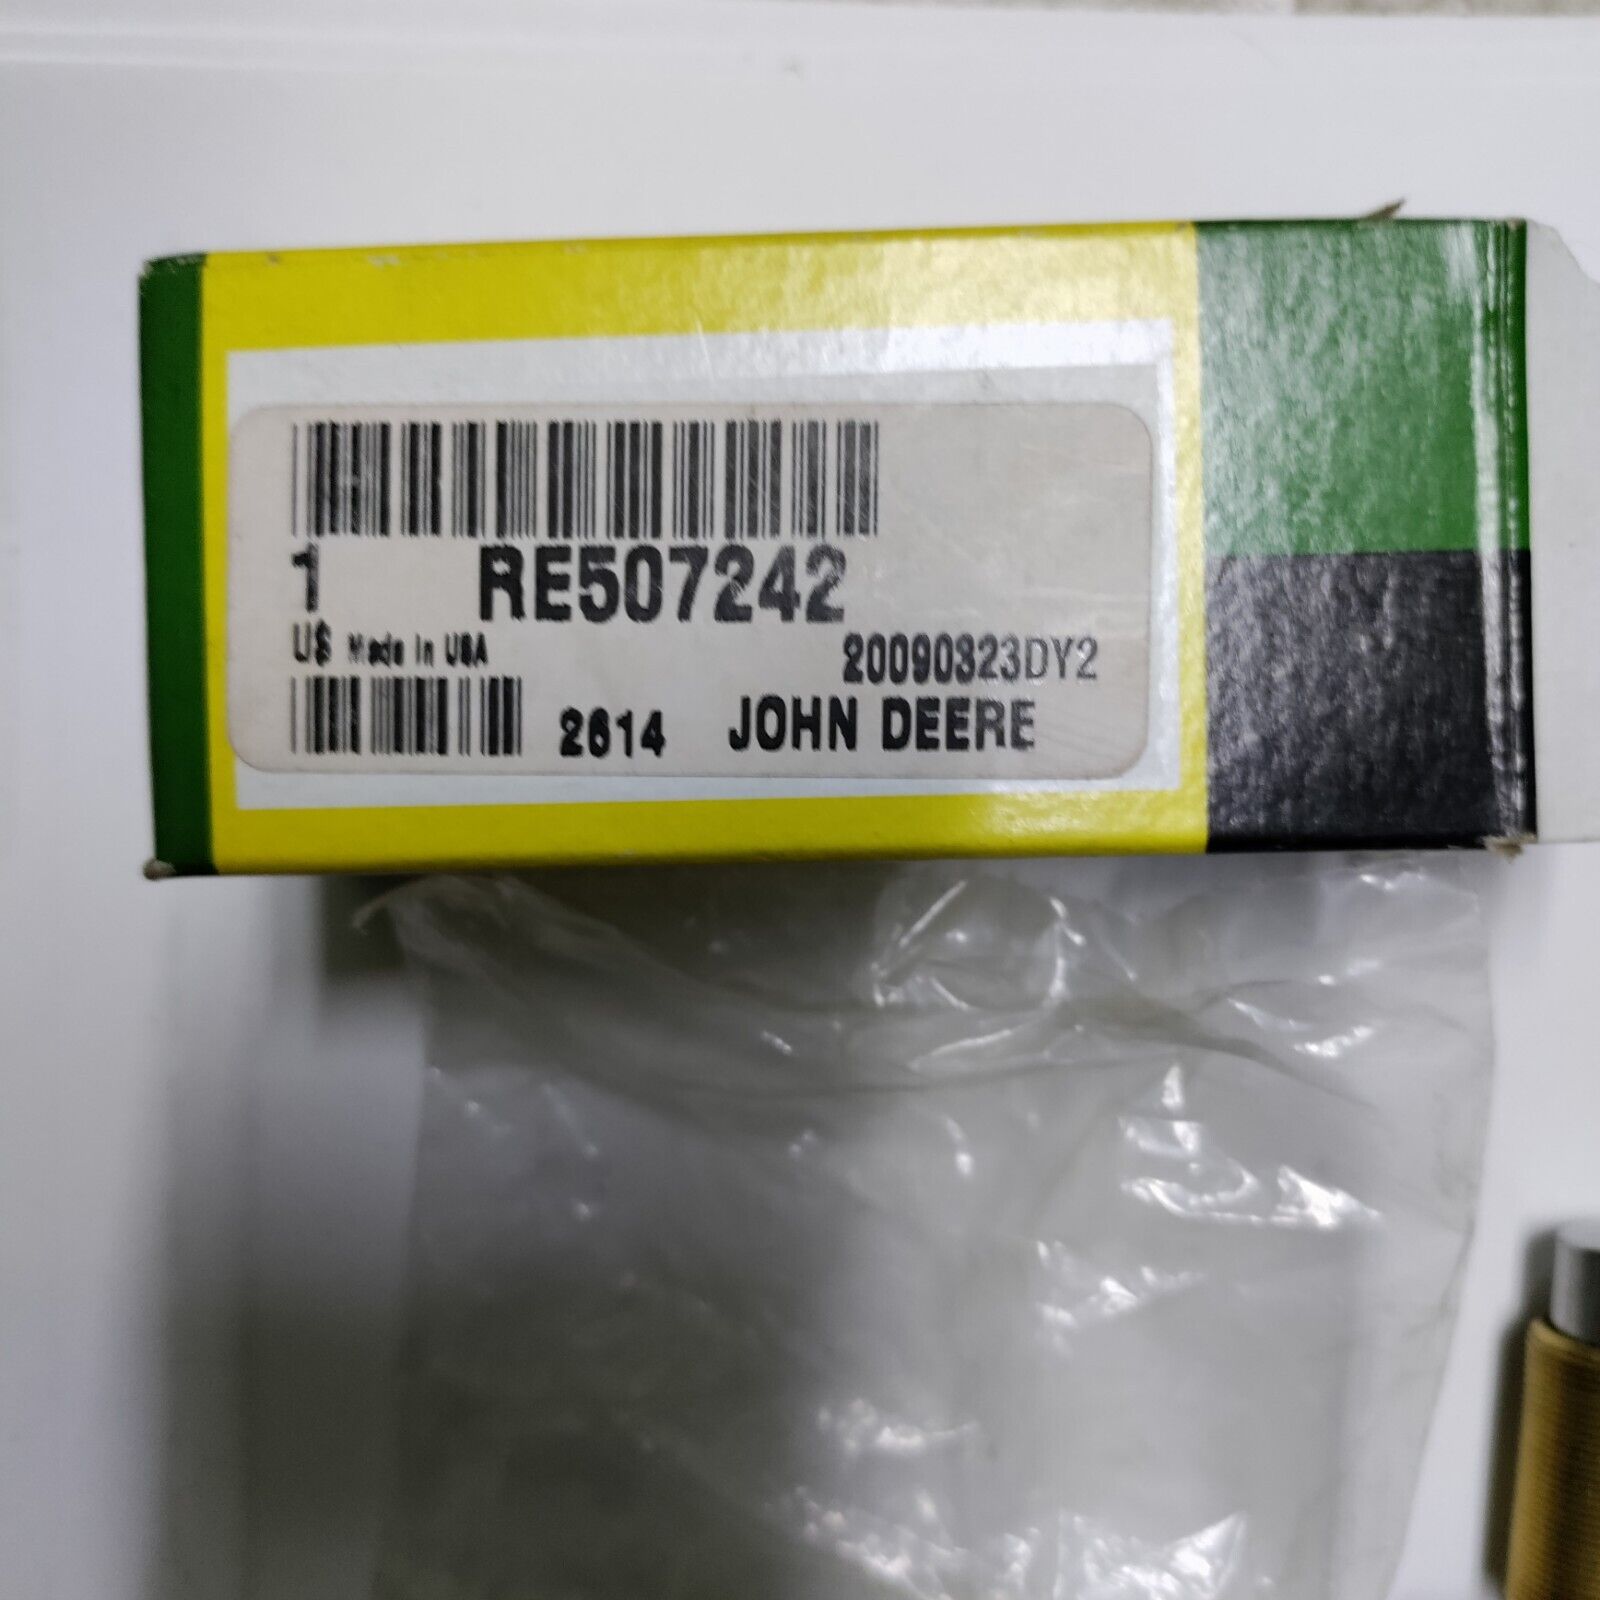 RE507242 JOHN DEERE SWITCH NEW IN BOX w / FREE SHIPPING